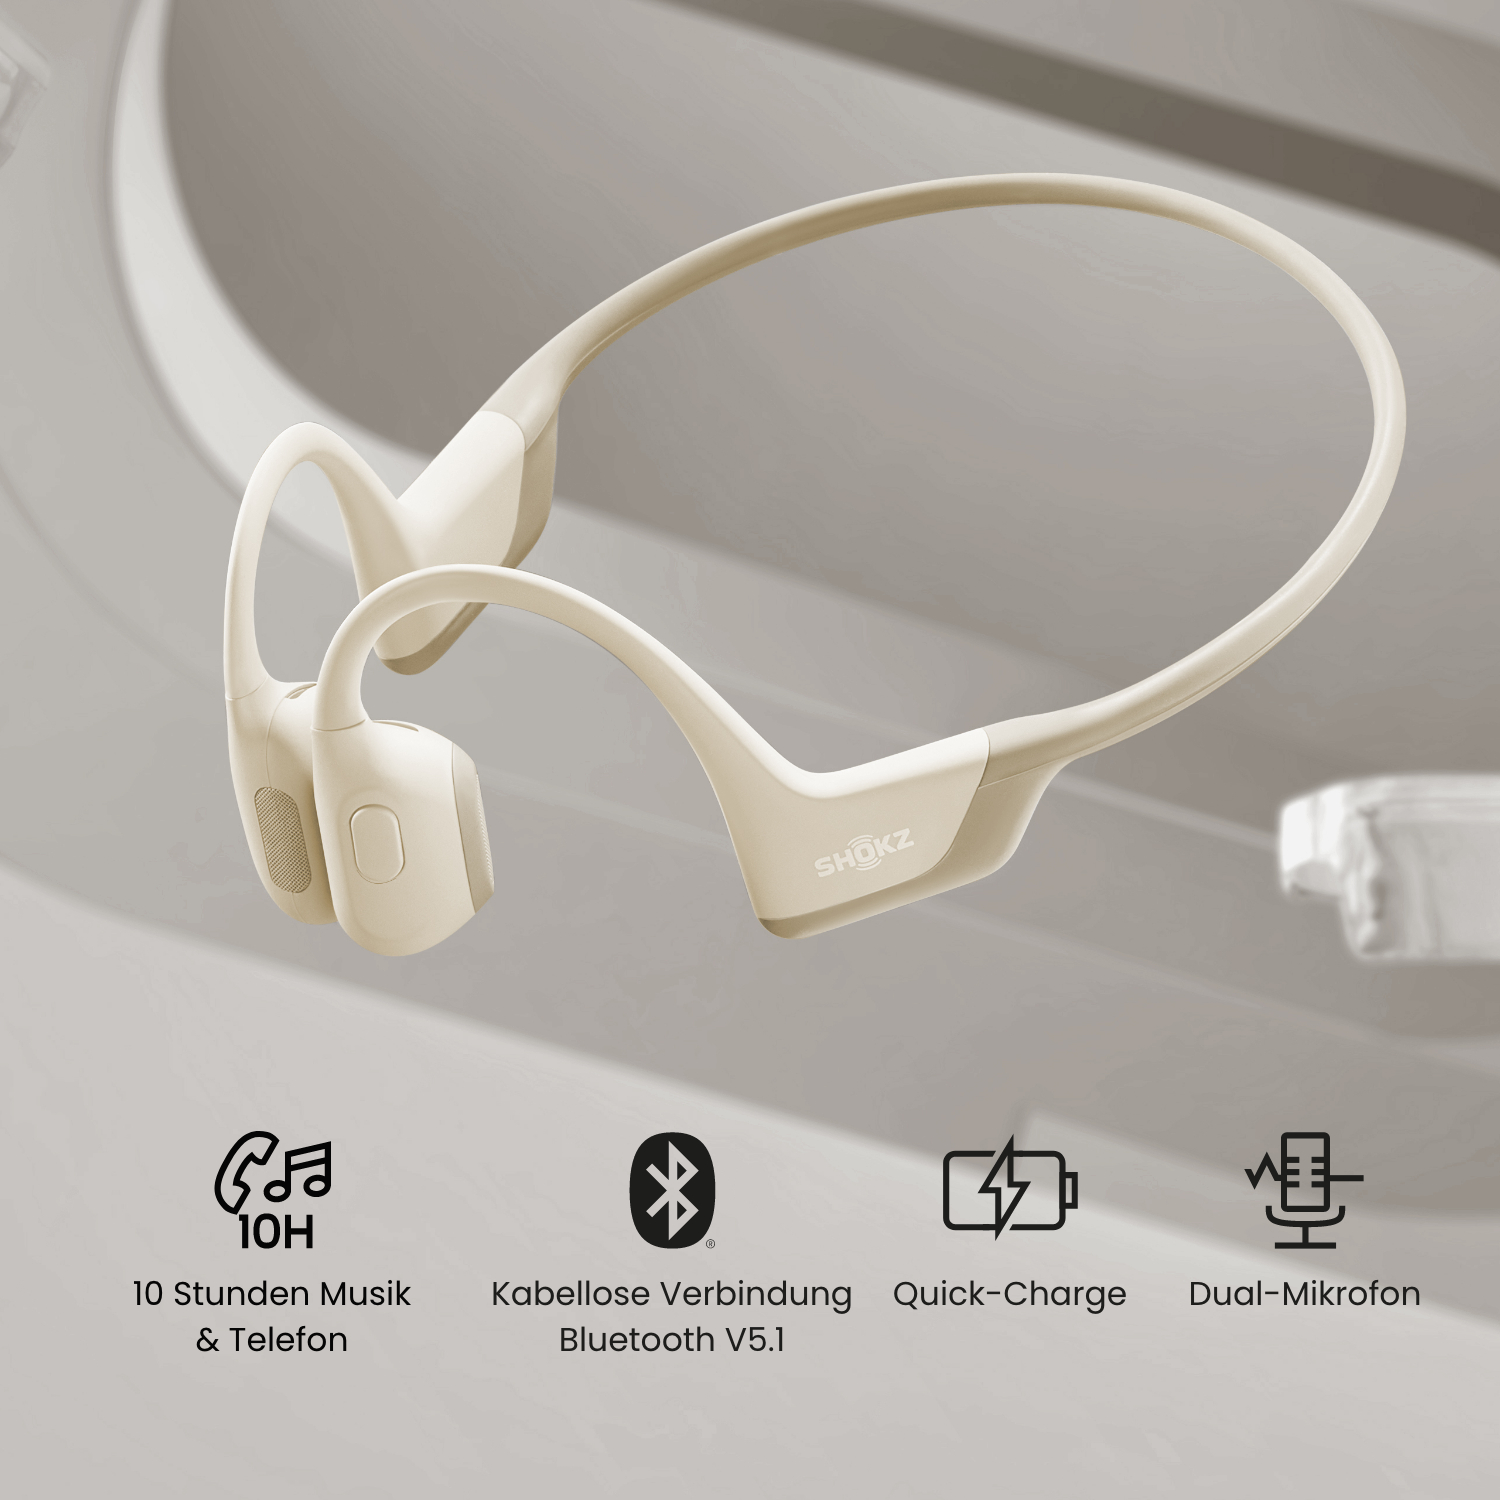 Mini, OpenRun SHOKZ Bluetooth Kopfhörer Open-ear Pro Beige